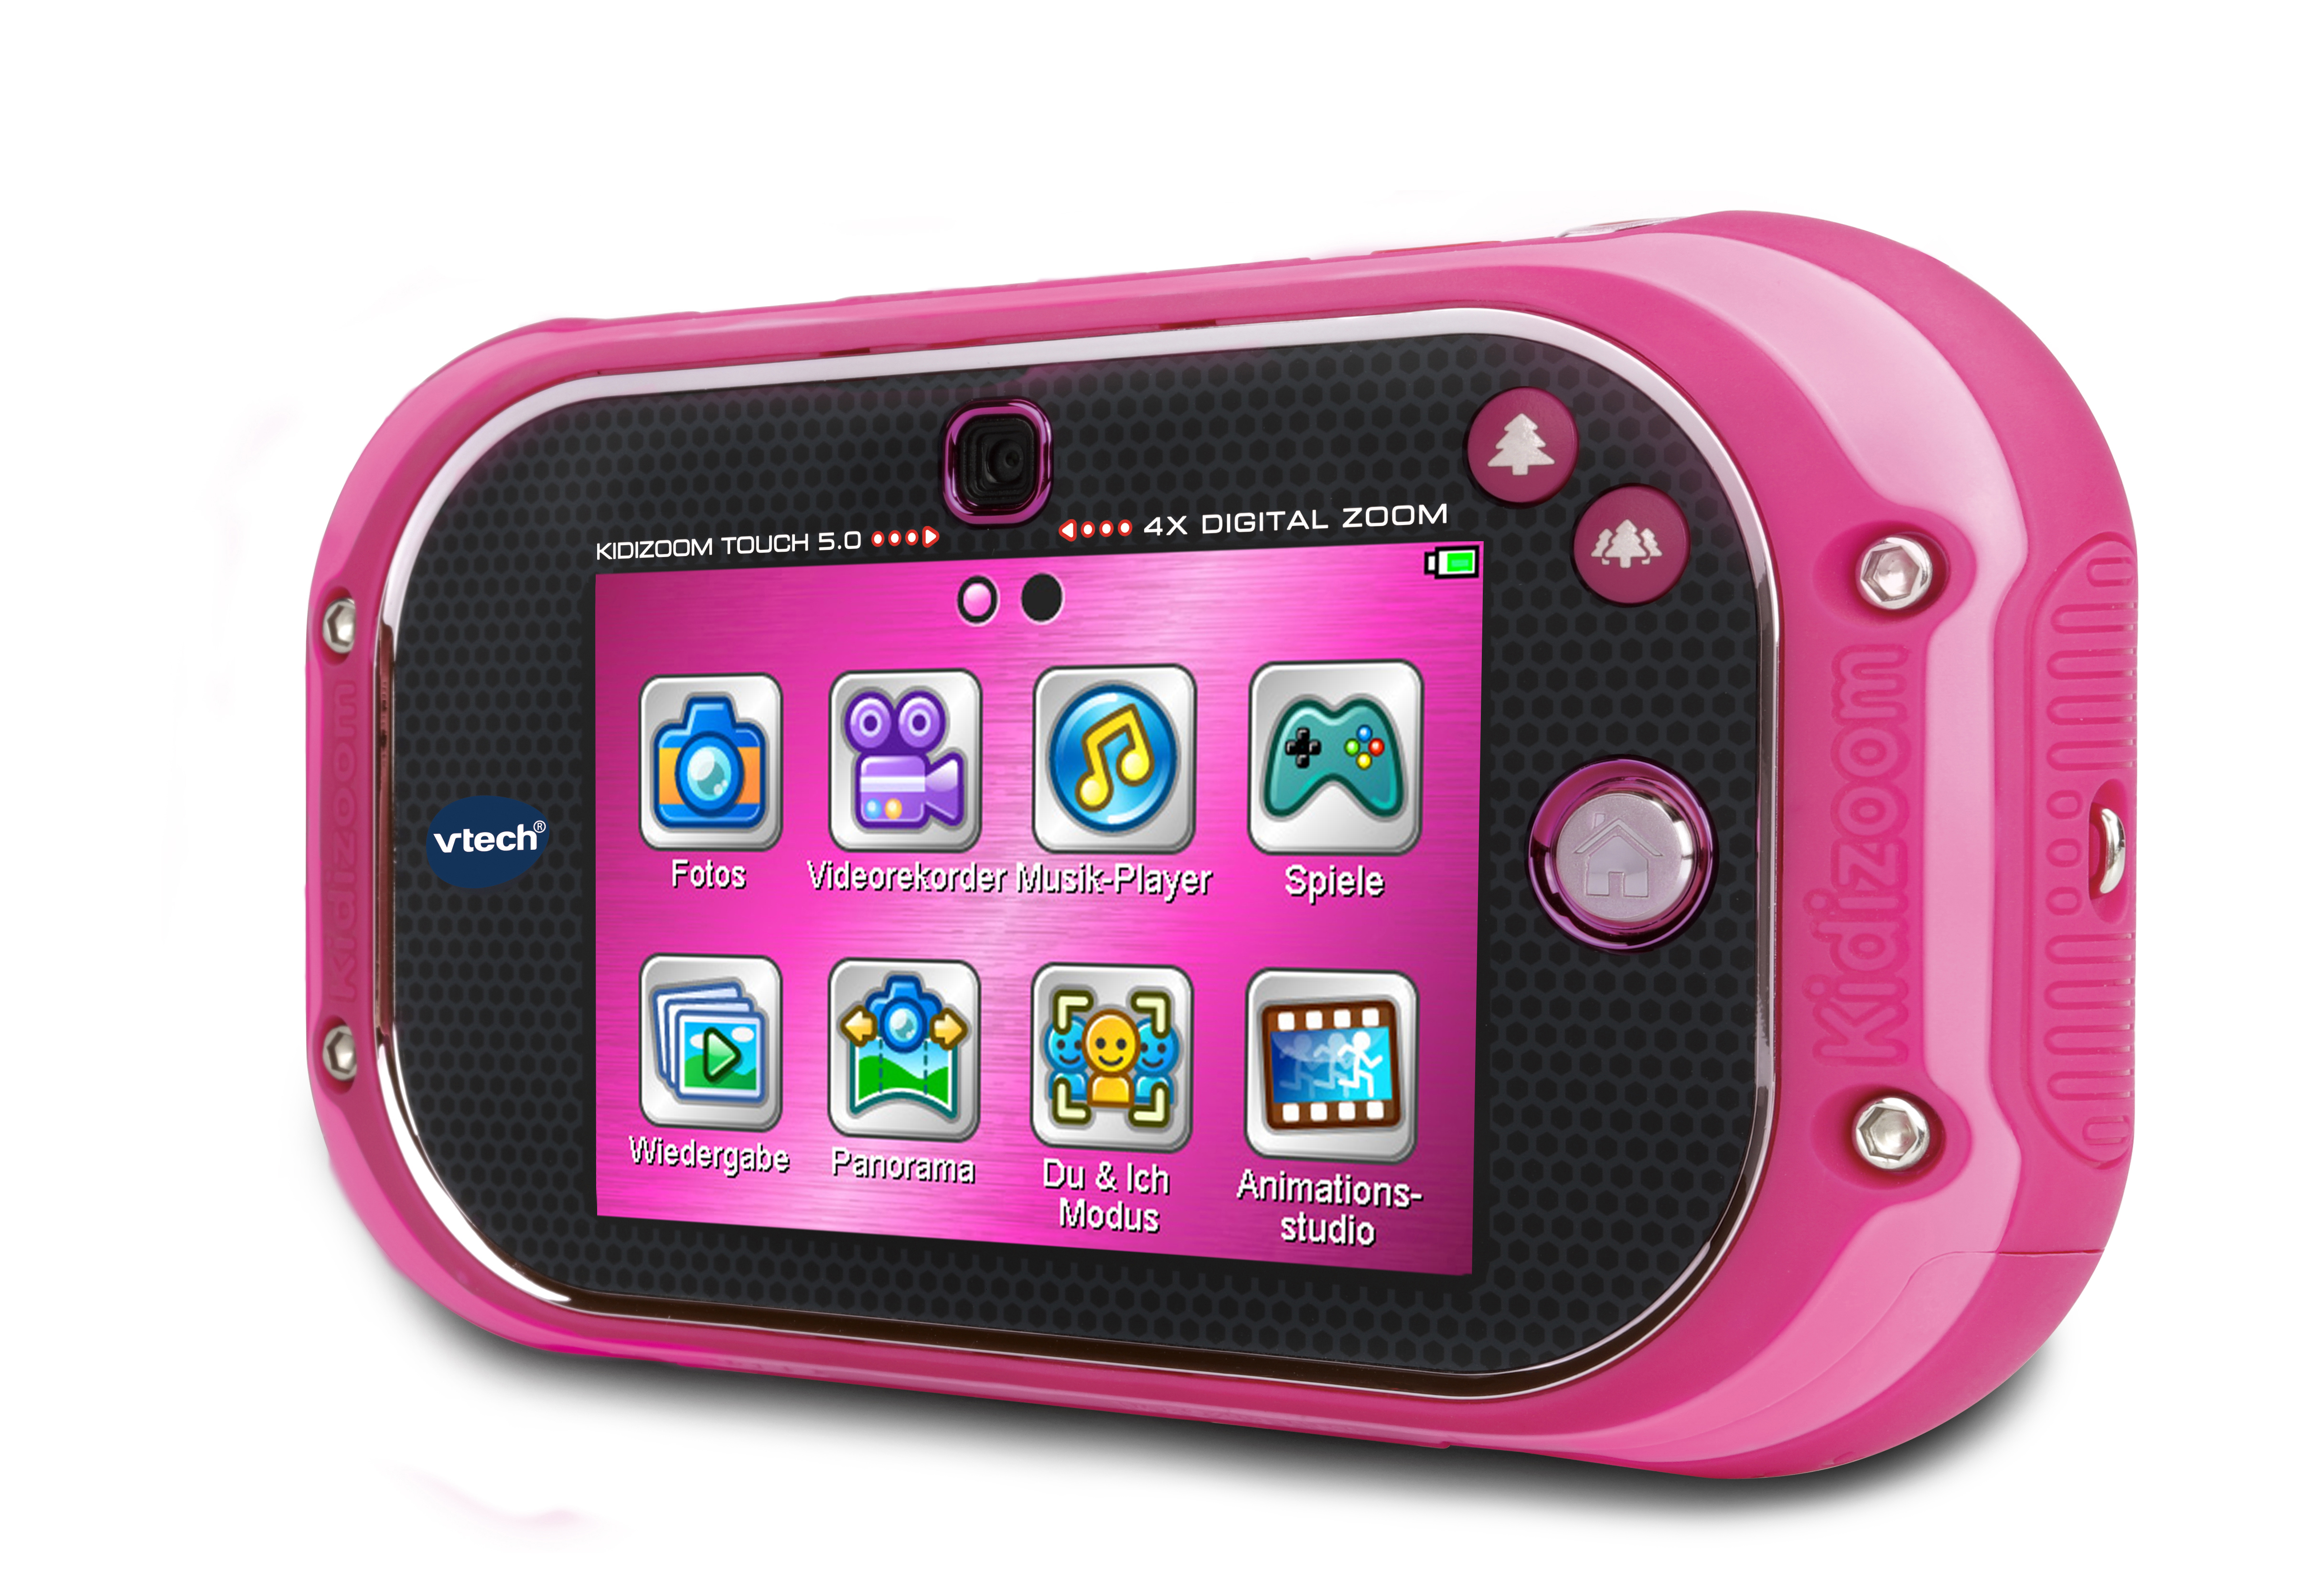 Mehrfarbig VTECH Kinderkamera, Kidizoom Pink Touch 5.0